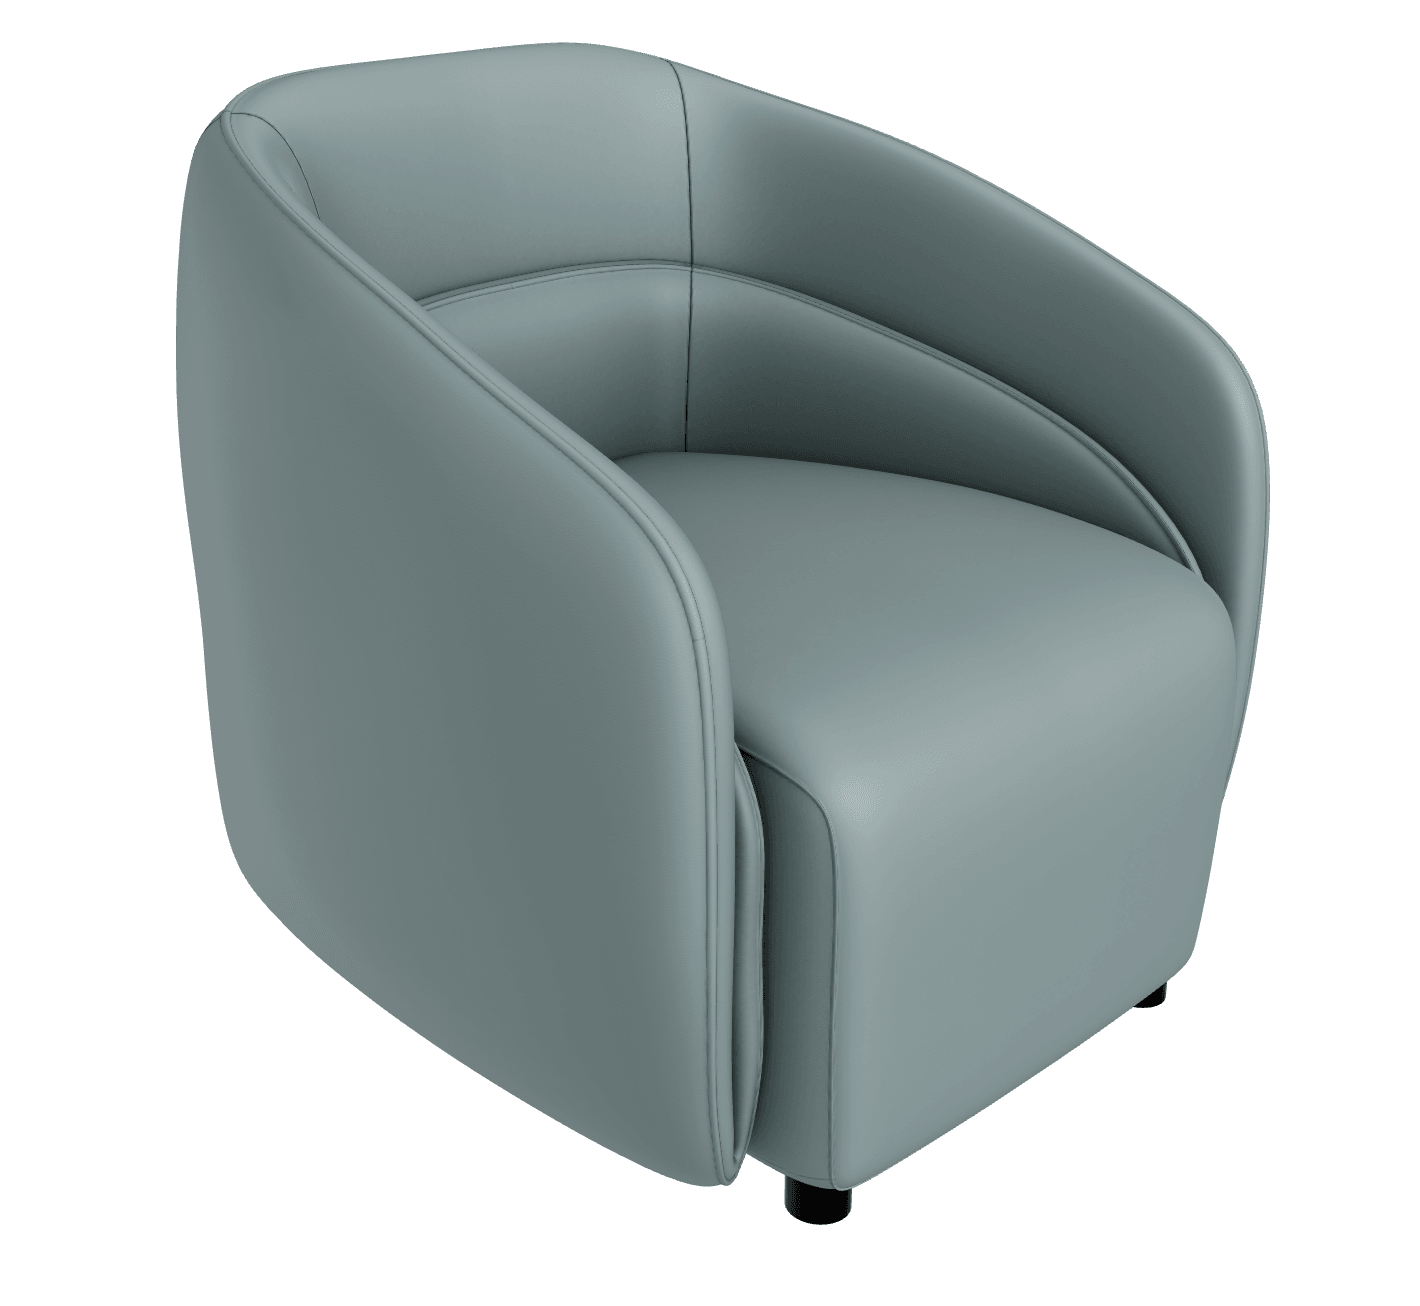 Botao Accent Chair - Euro Living Furniture